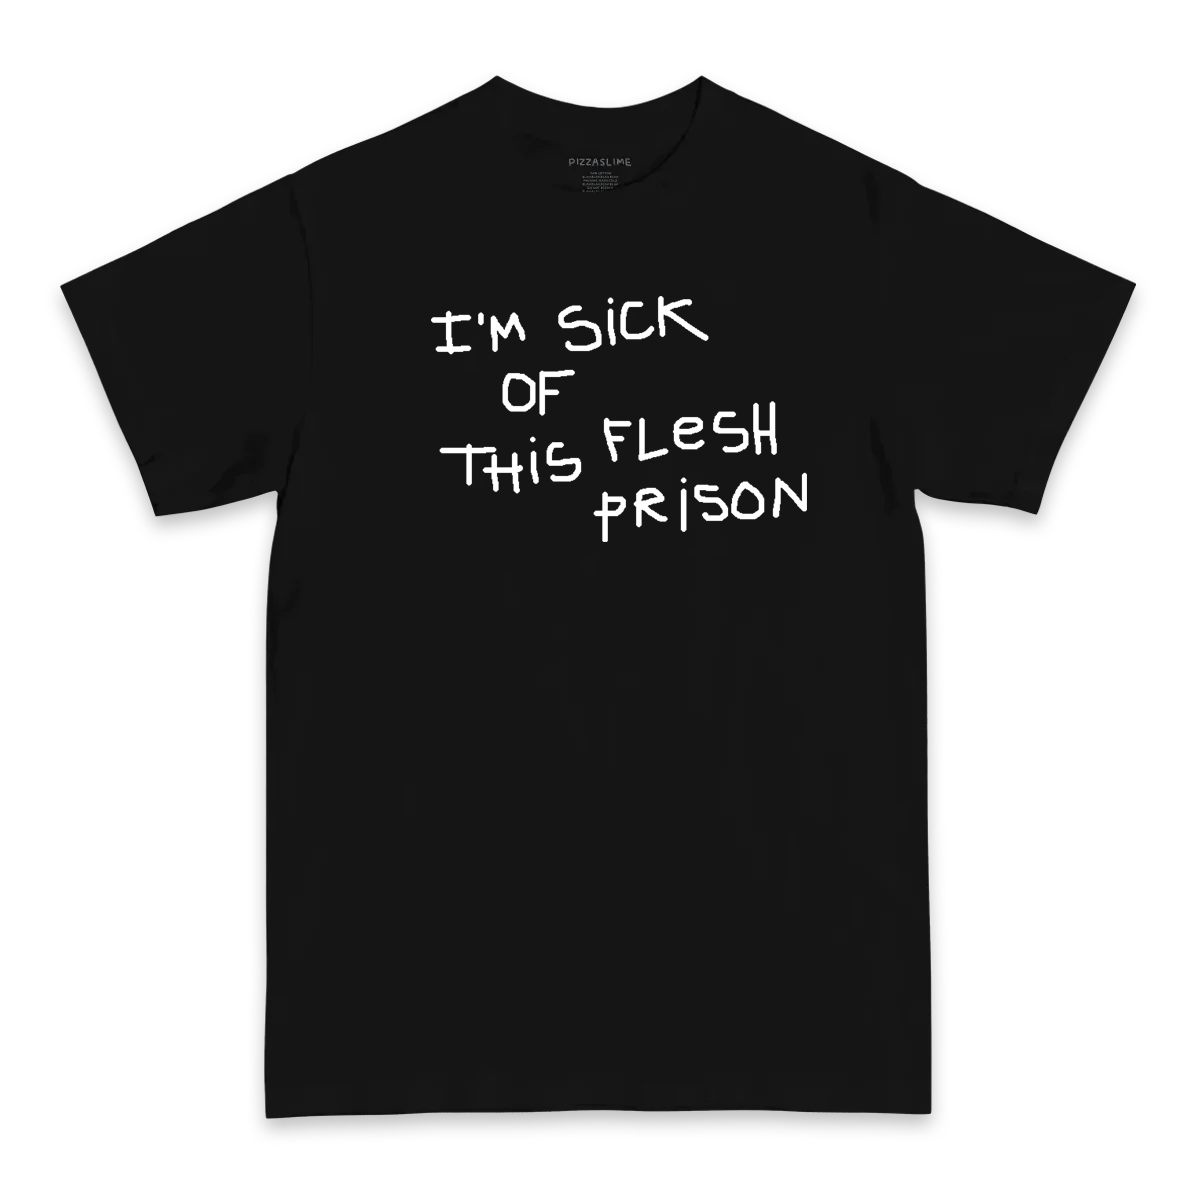 I'M SICK OF THIS FLESH PRISON T-shirt